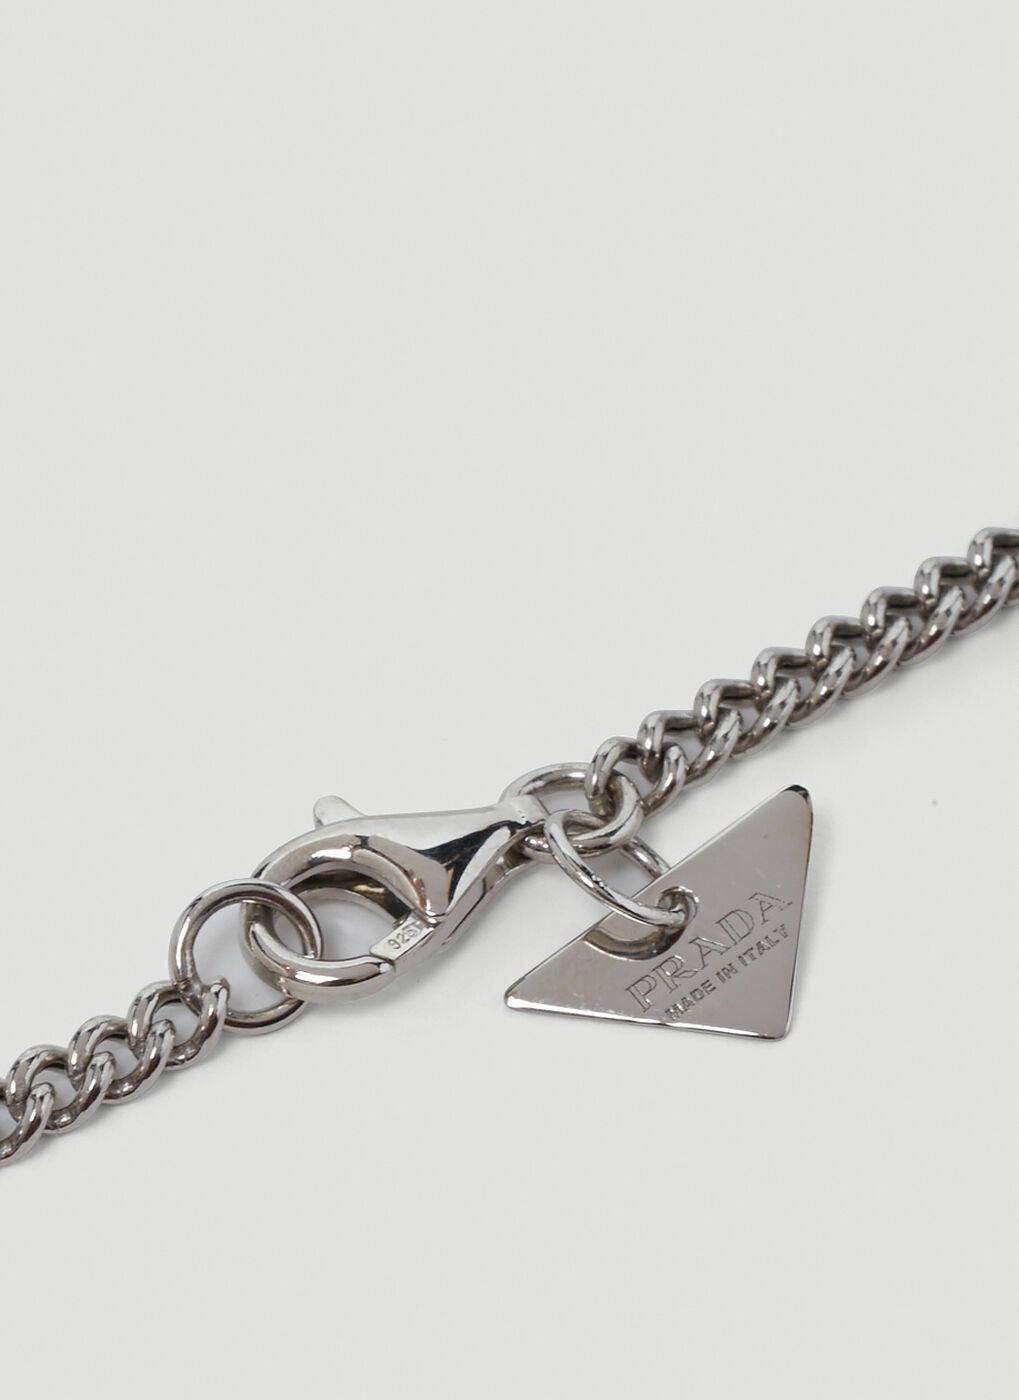 Silver Prada Necklace - Shop on Pinterest